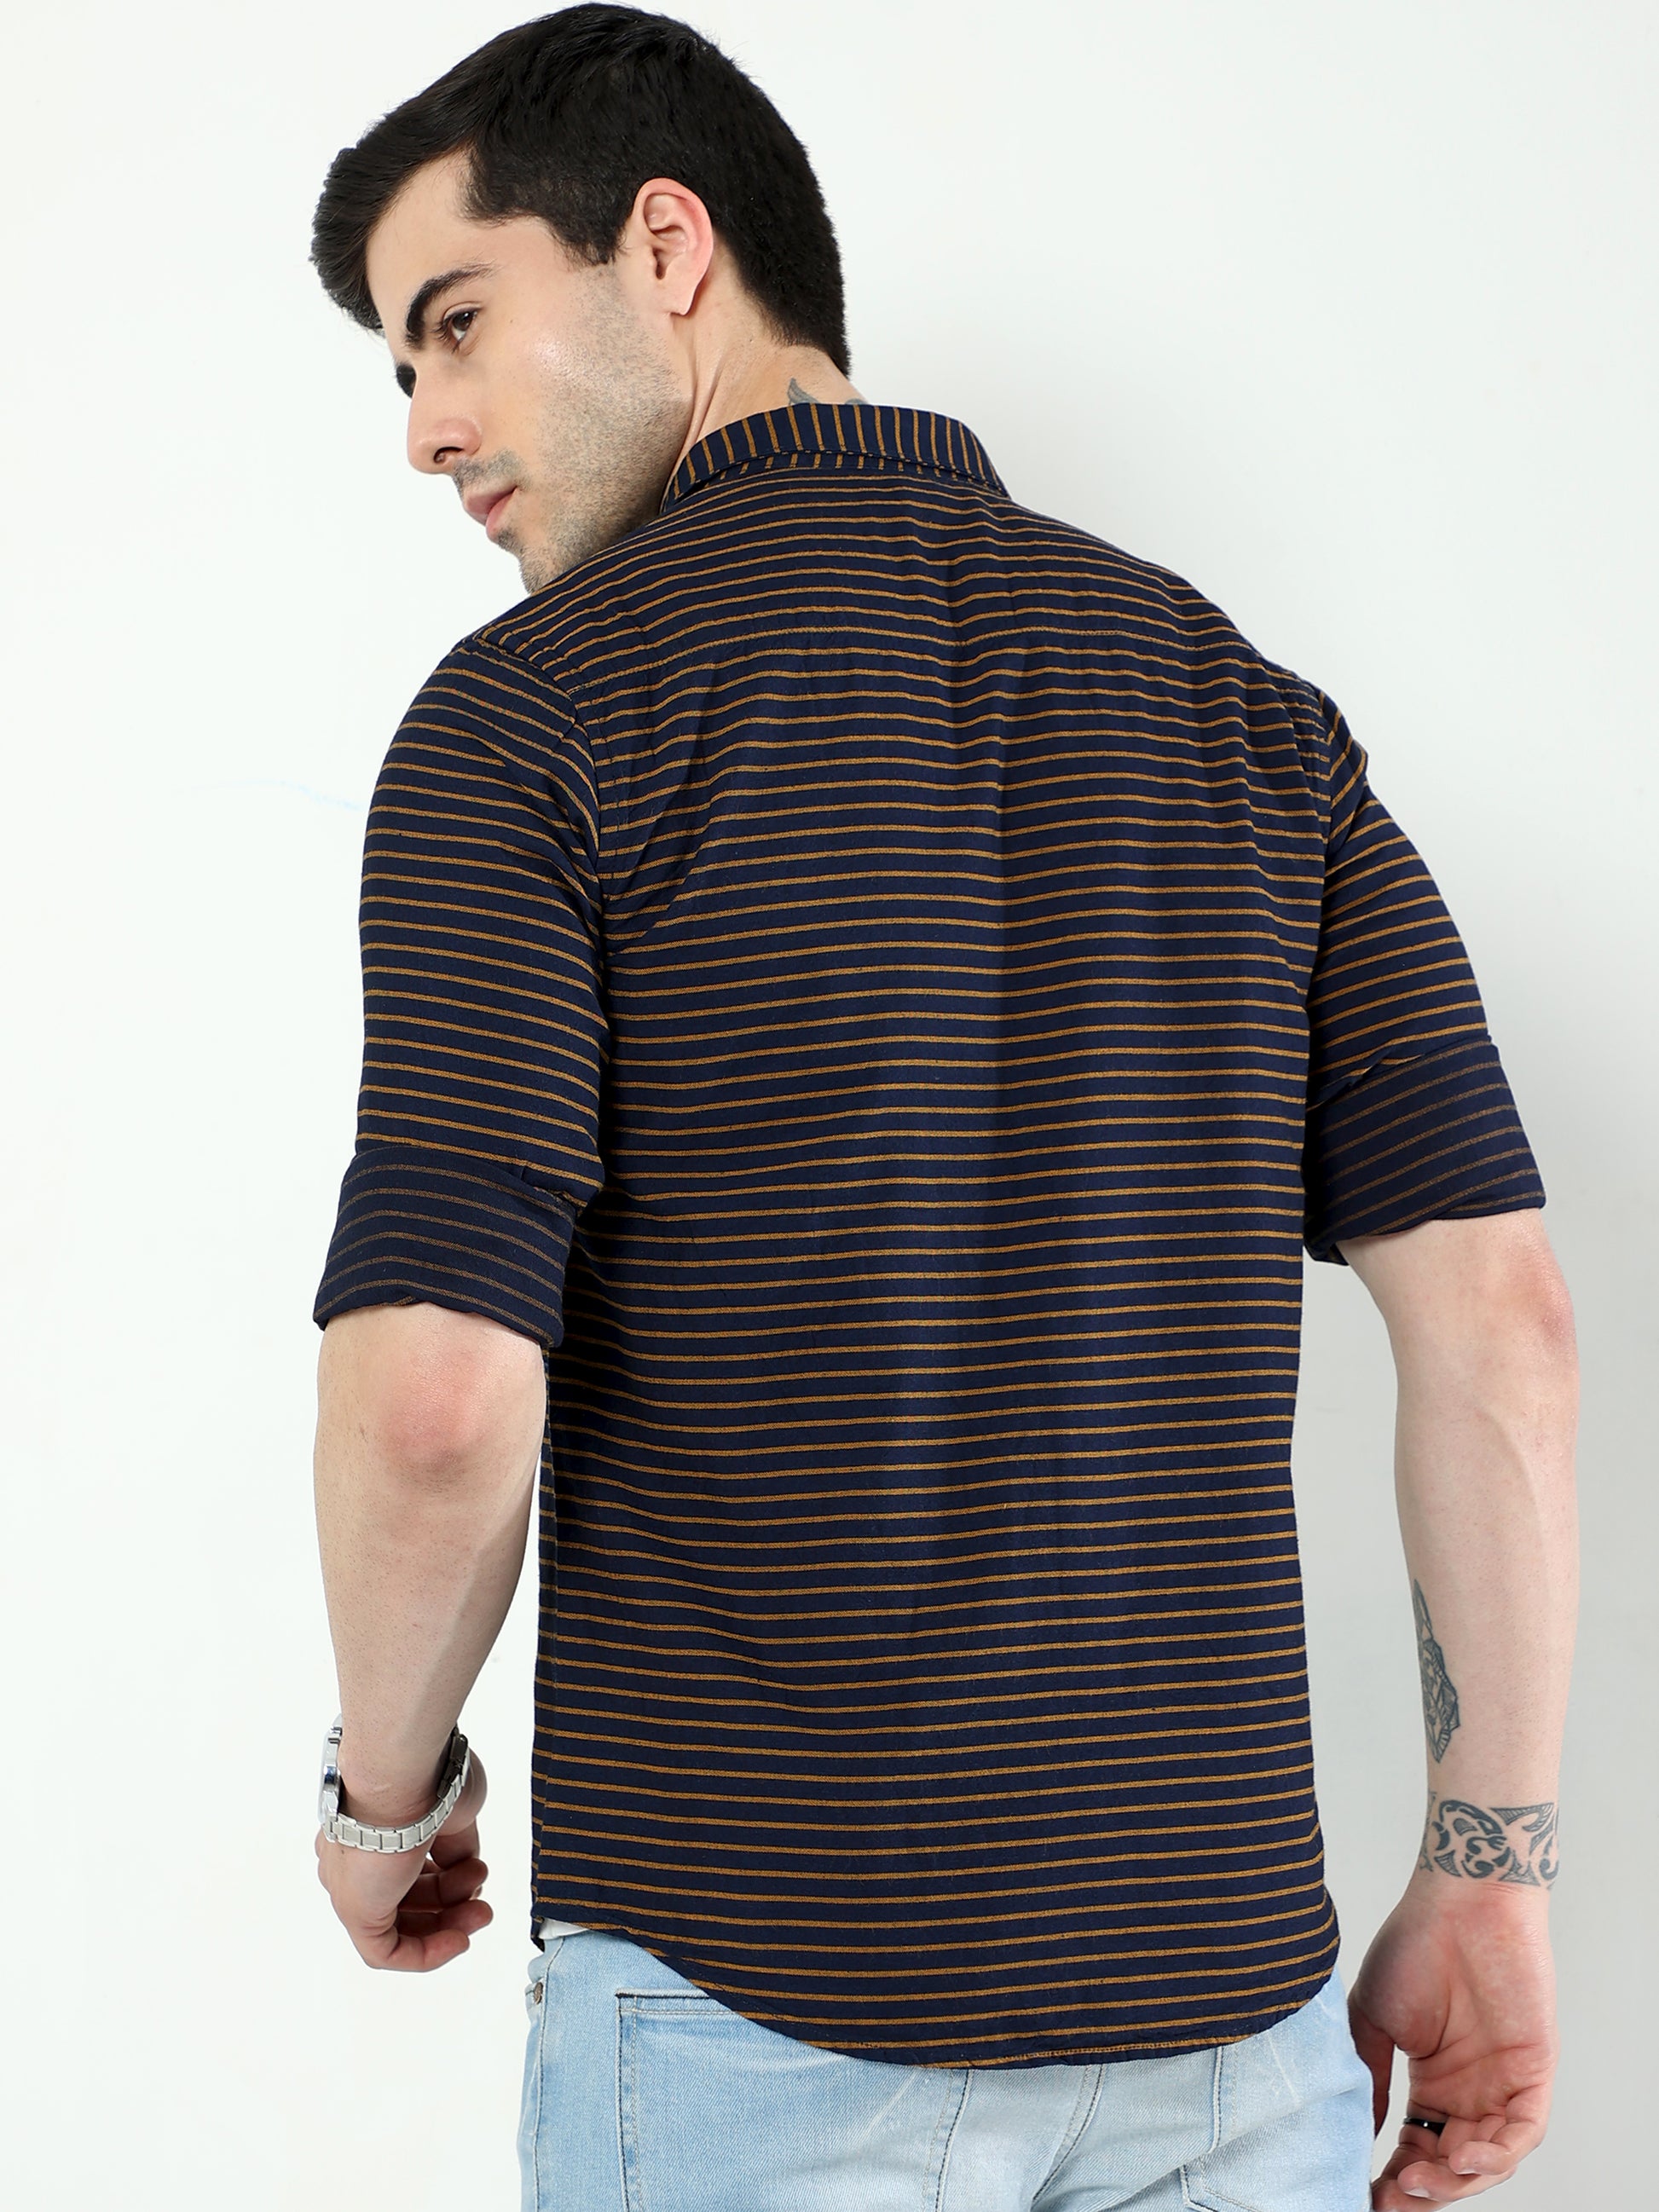 Navy Striped Full Sleeve Shirt for Men at Great Price – DAKS NEO